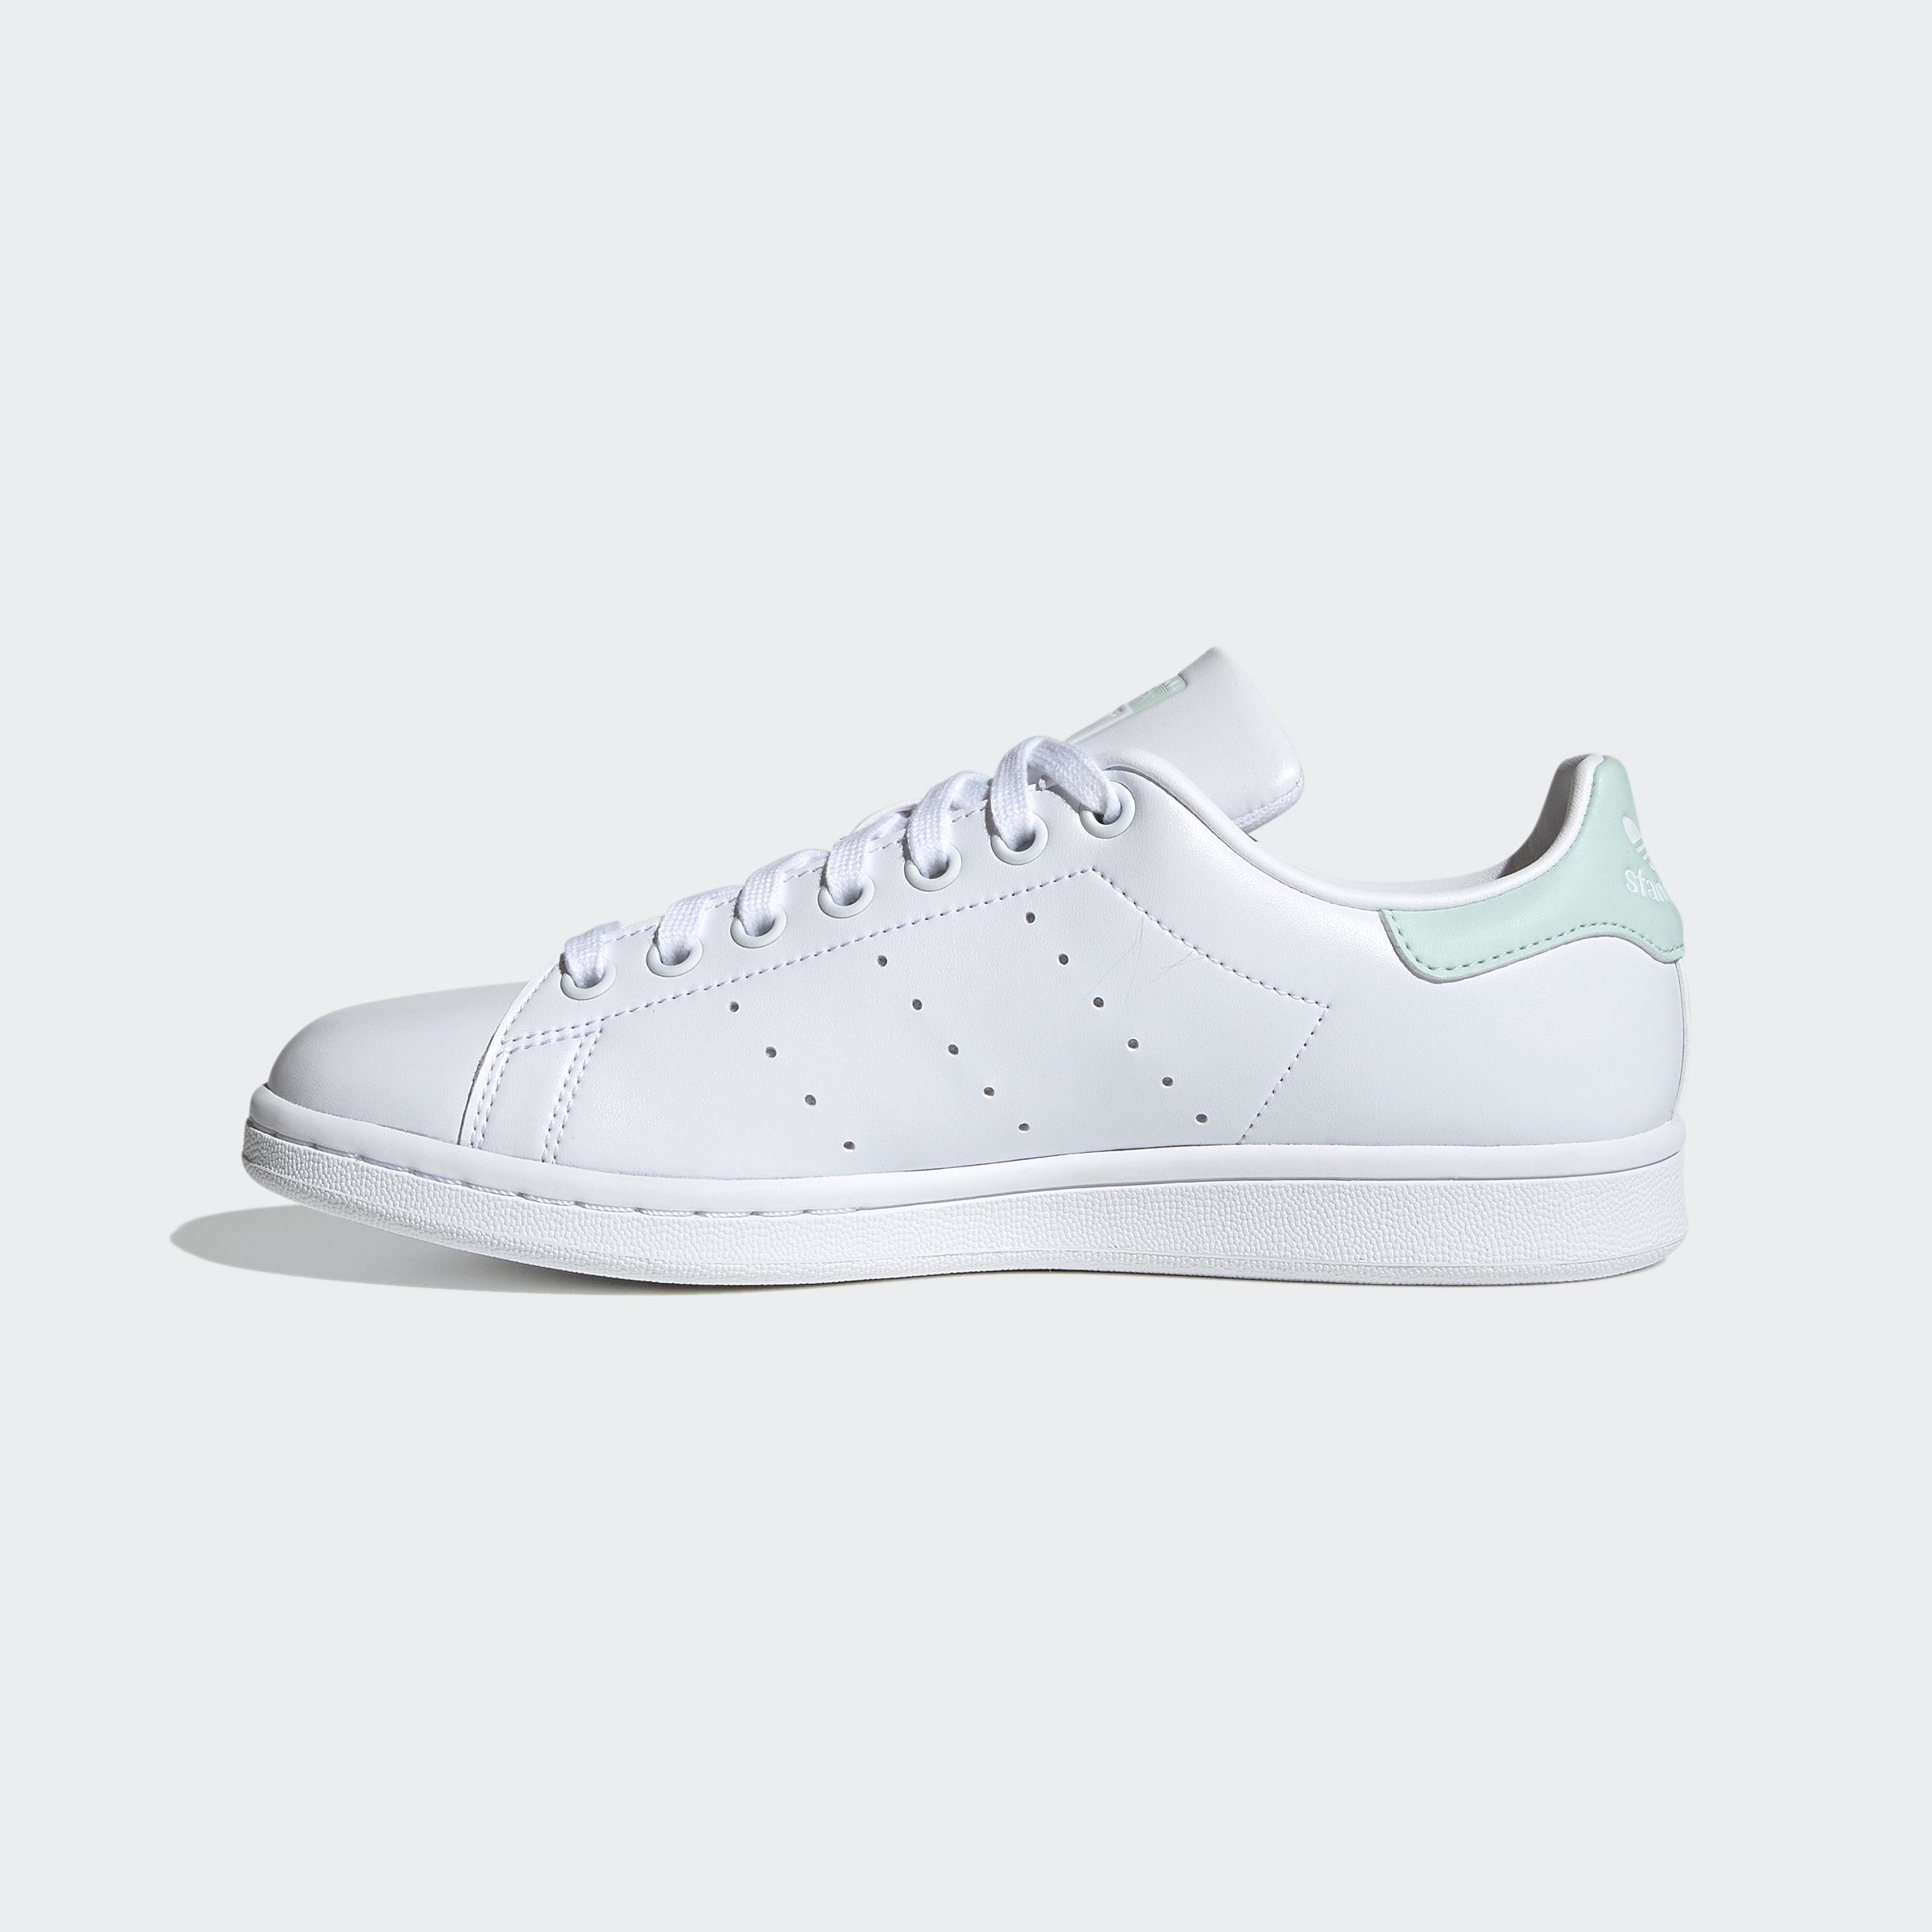 / Cloud adidas Dash Originals White Sneaker Black Green SMITH STAN / Core